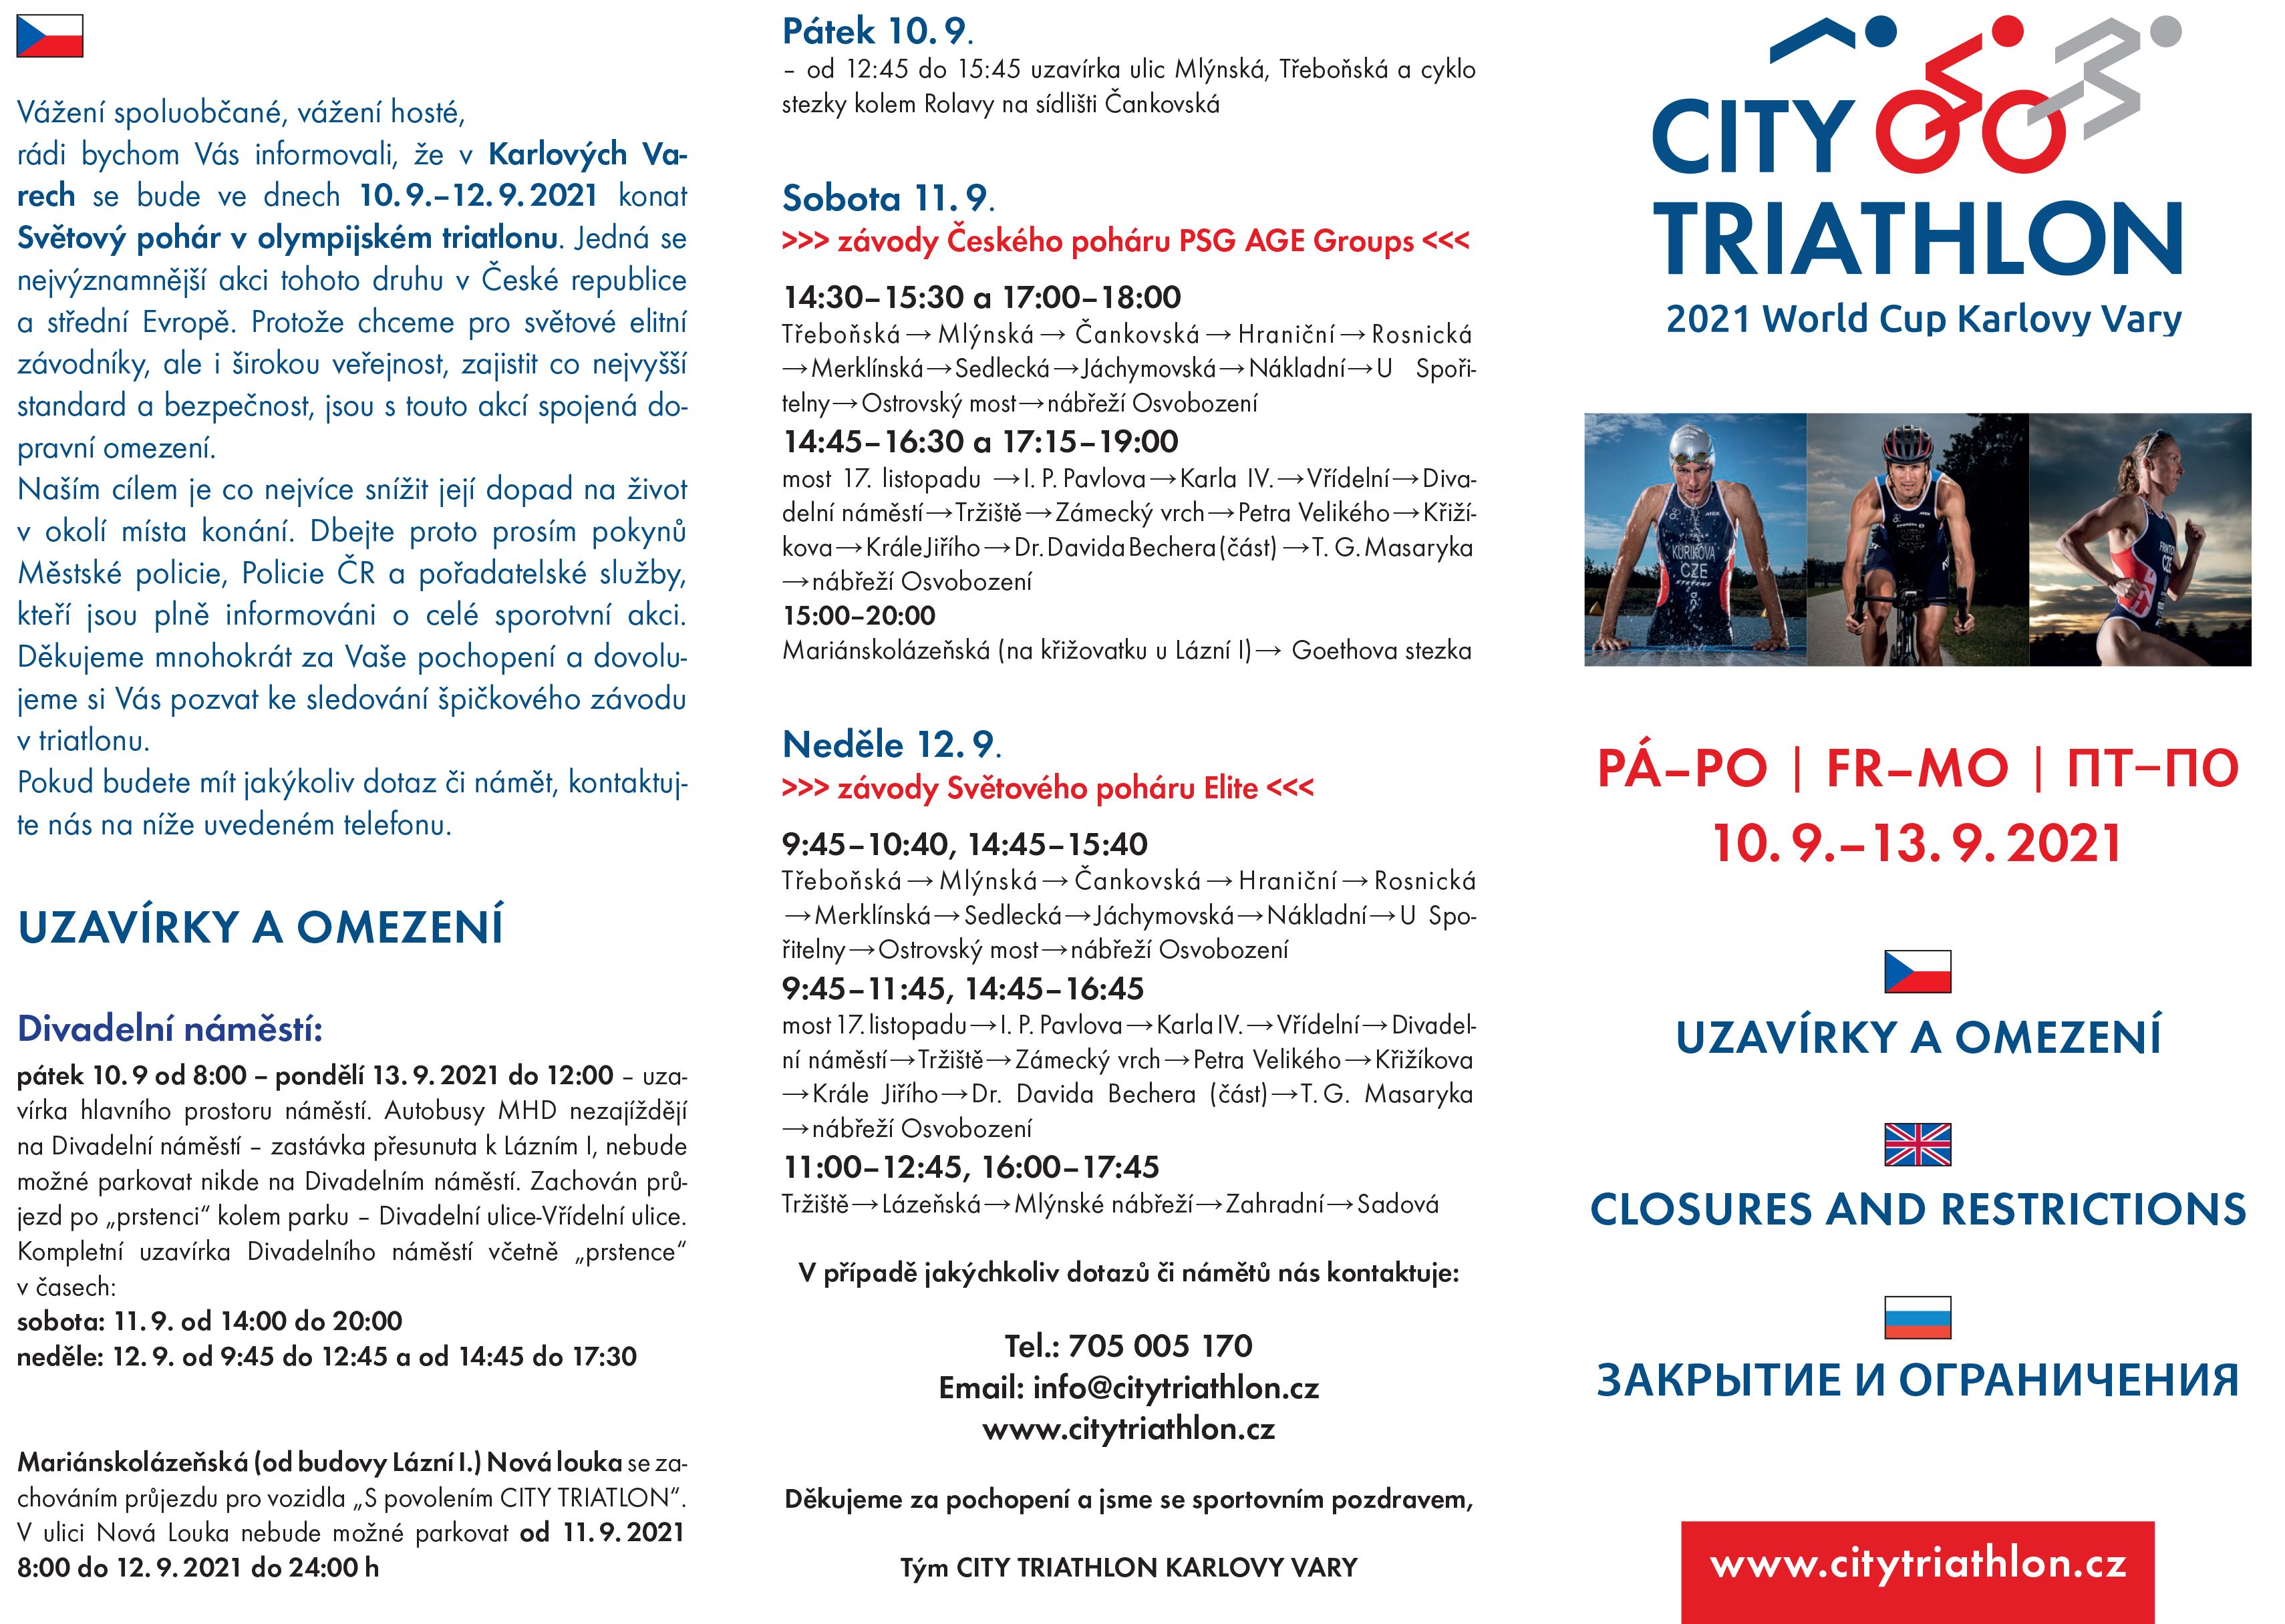 Triathlon in K. Vary